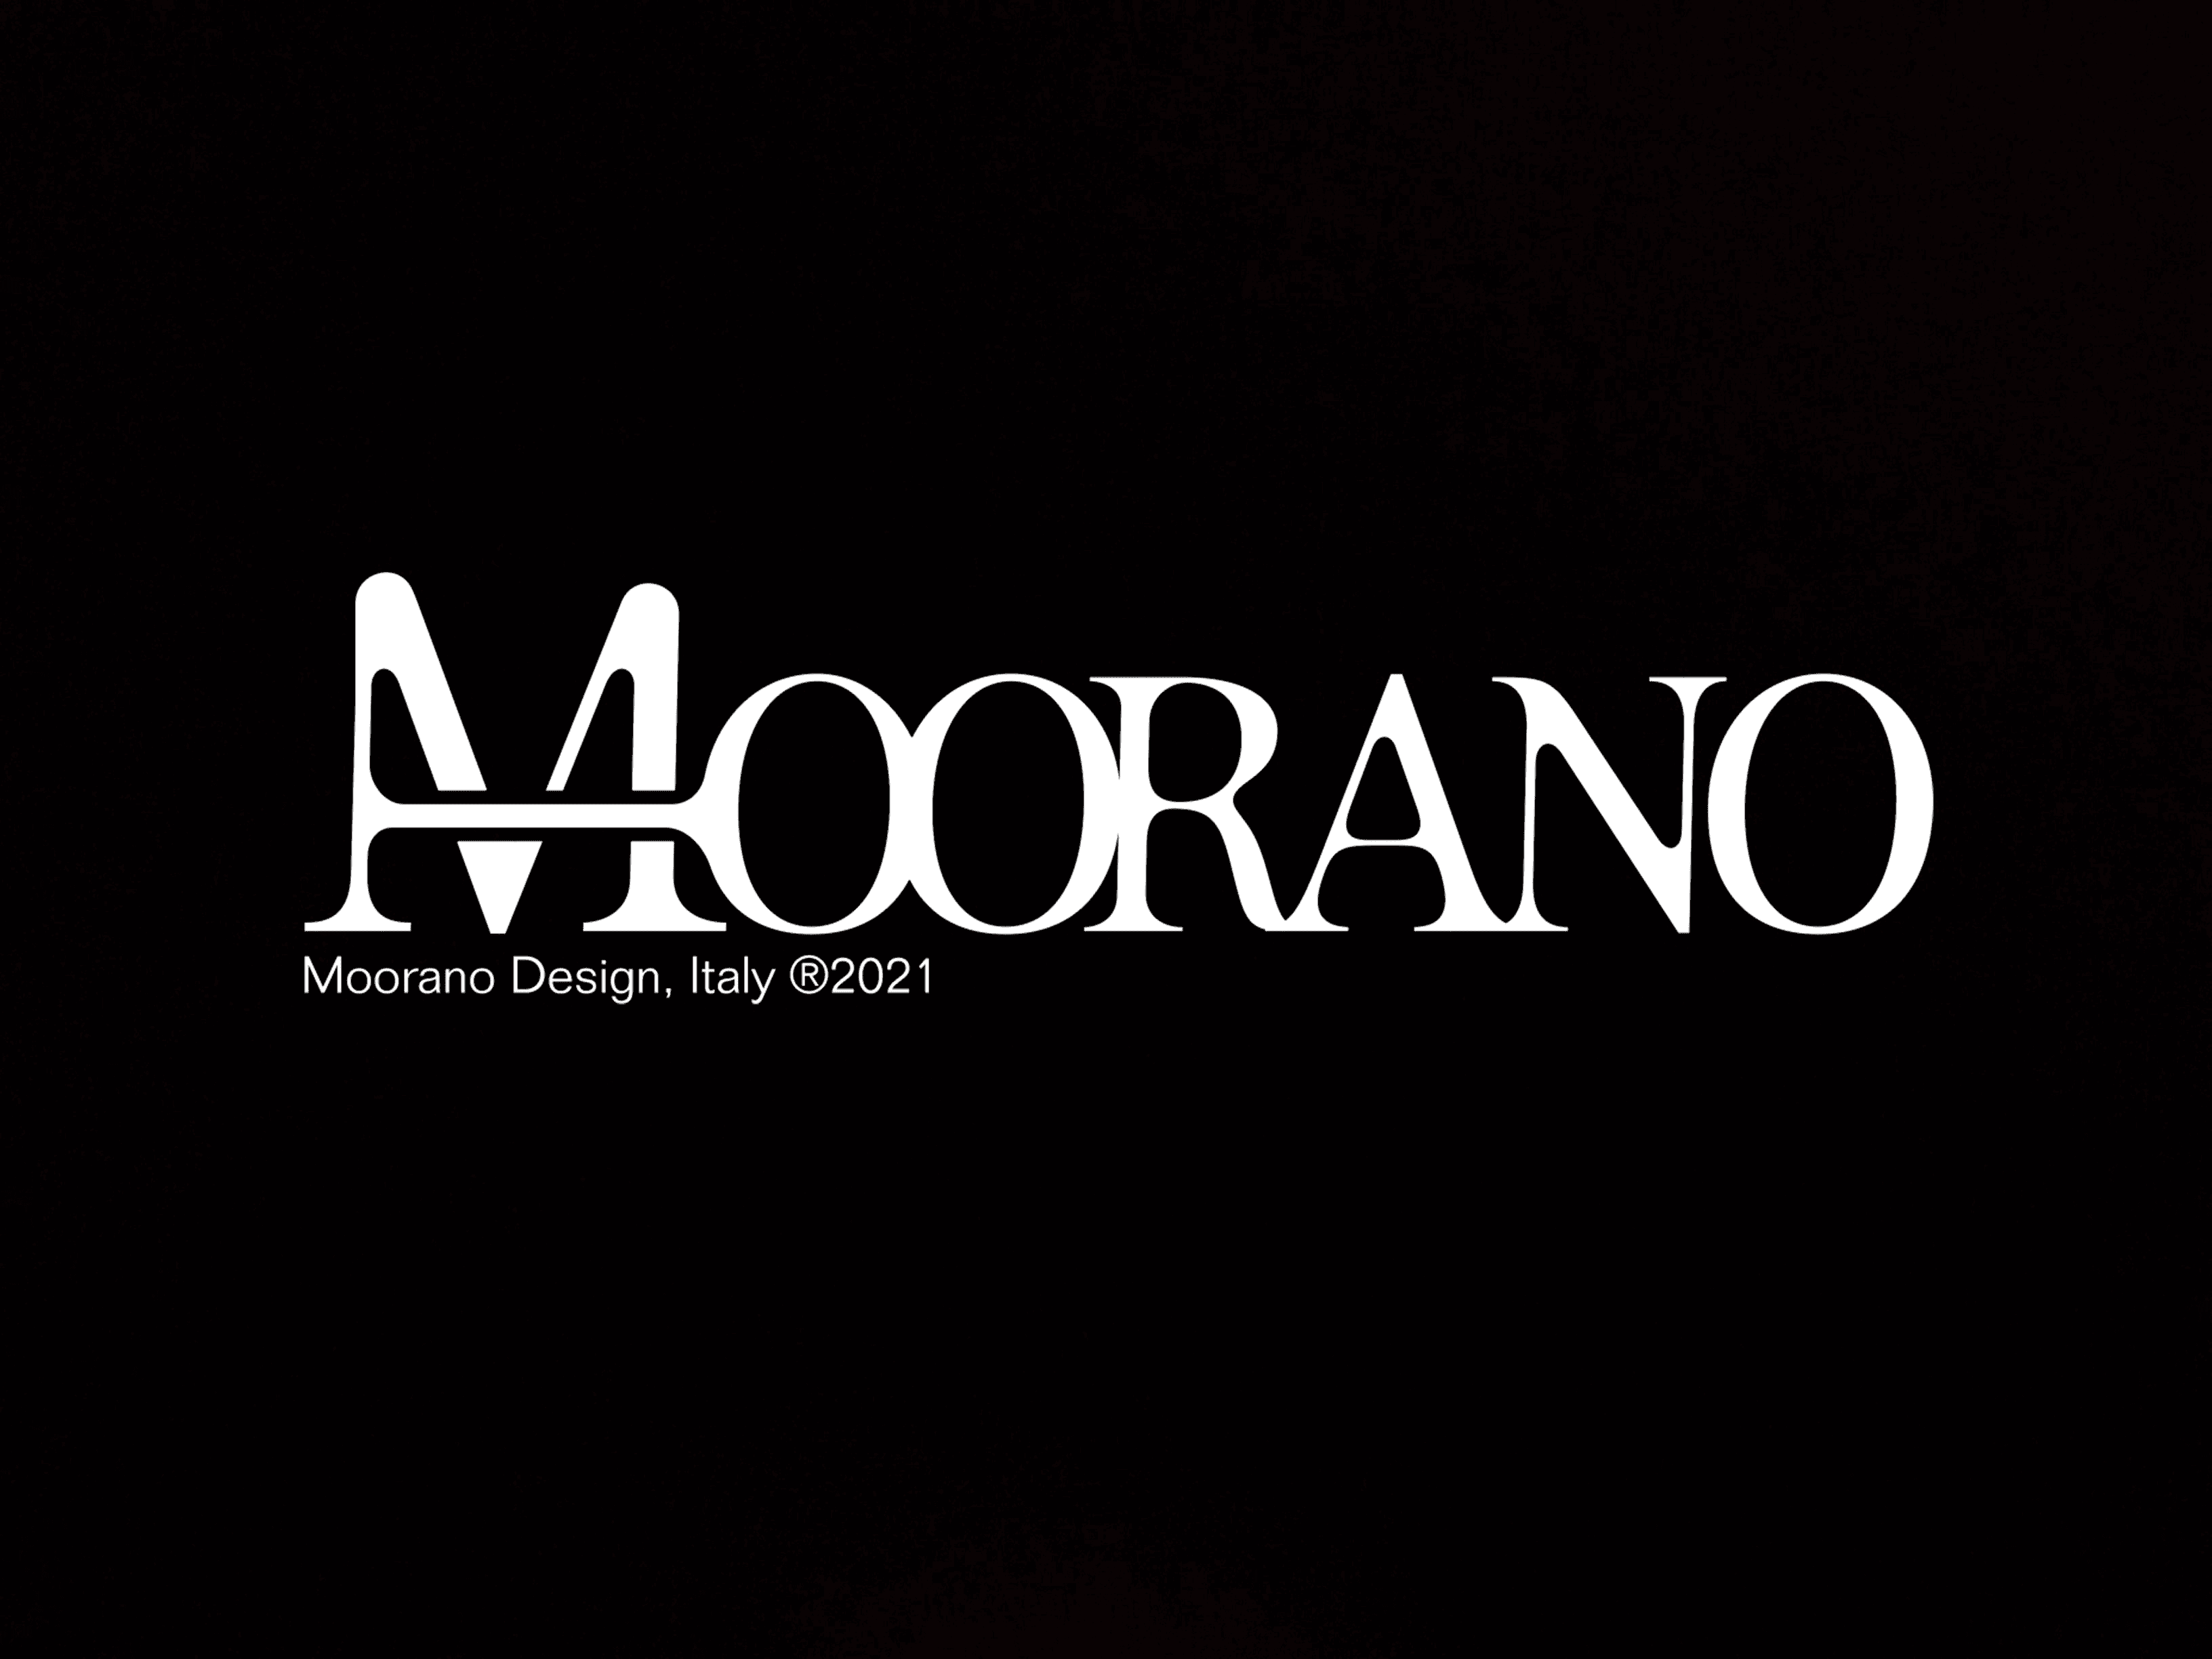 Moorano